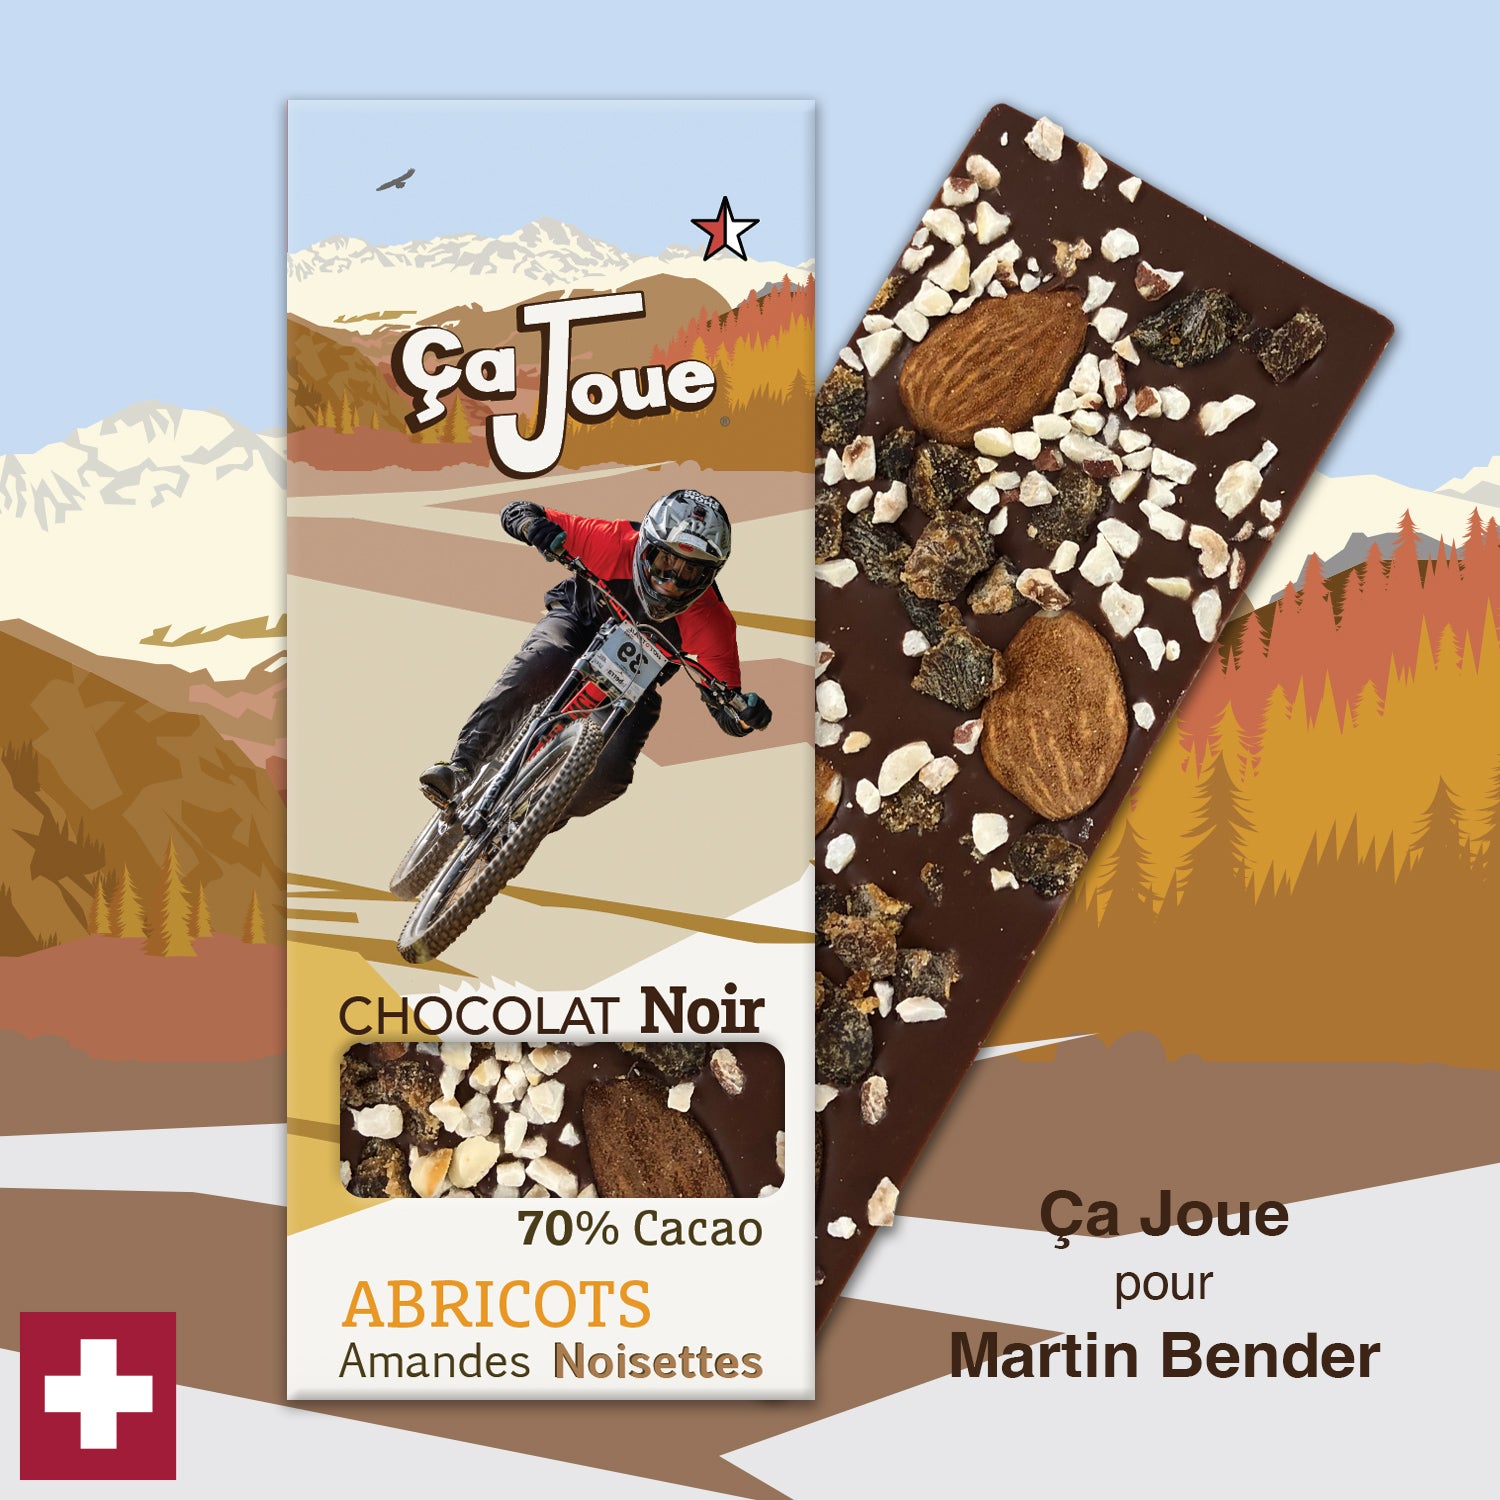 Ça Joue for Martin Bender (Ref-BN12) Chocolate from Val de Bagnes